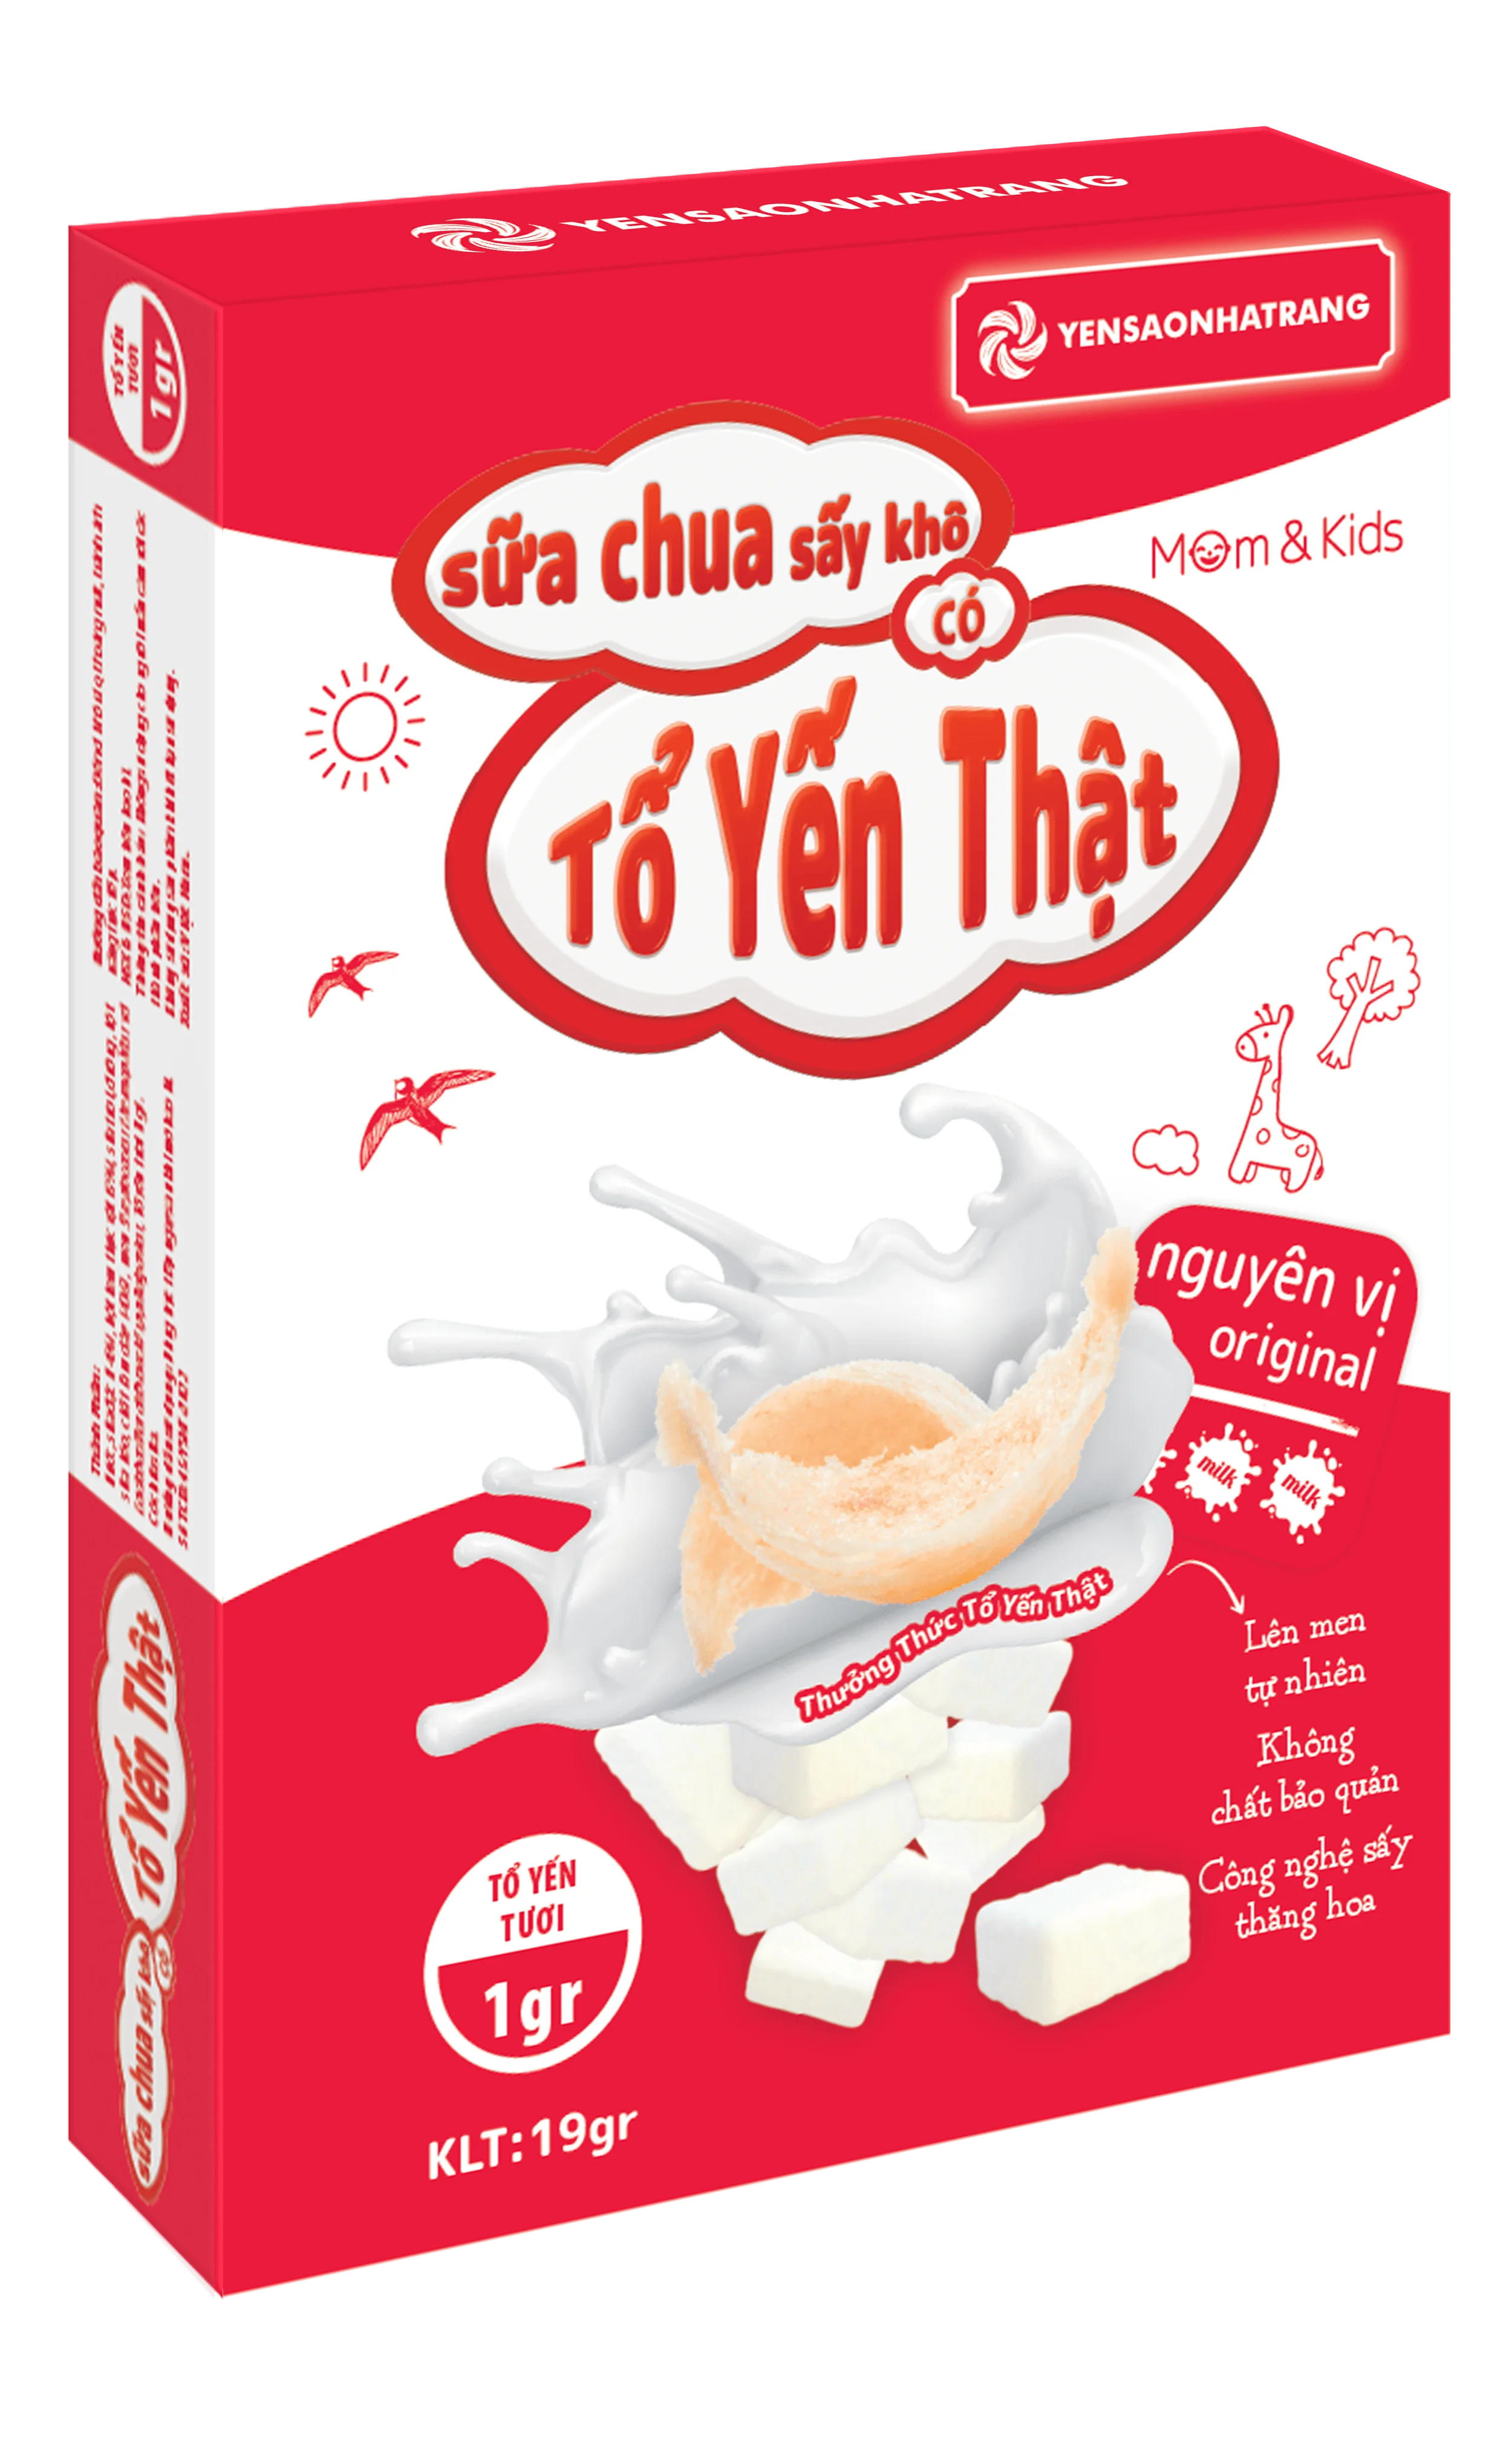 Freeze-Dried Yogurt (9.5g/box) Bag Storage Packing High Quality from Vietnam Supplier Reasonable Price